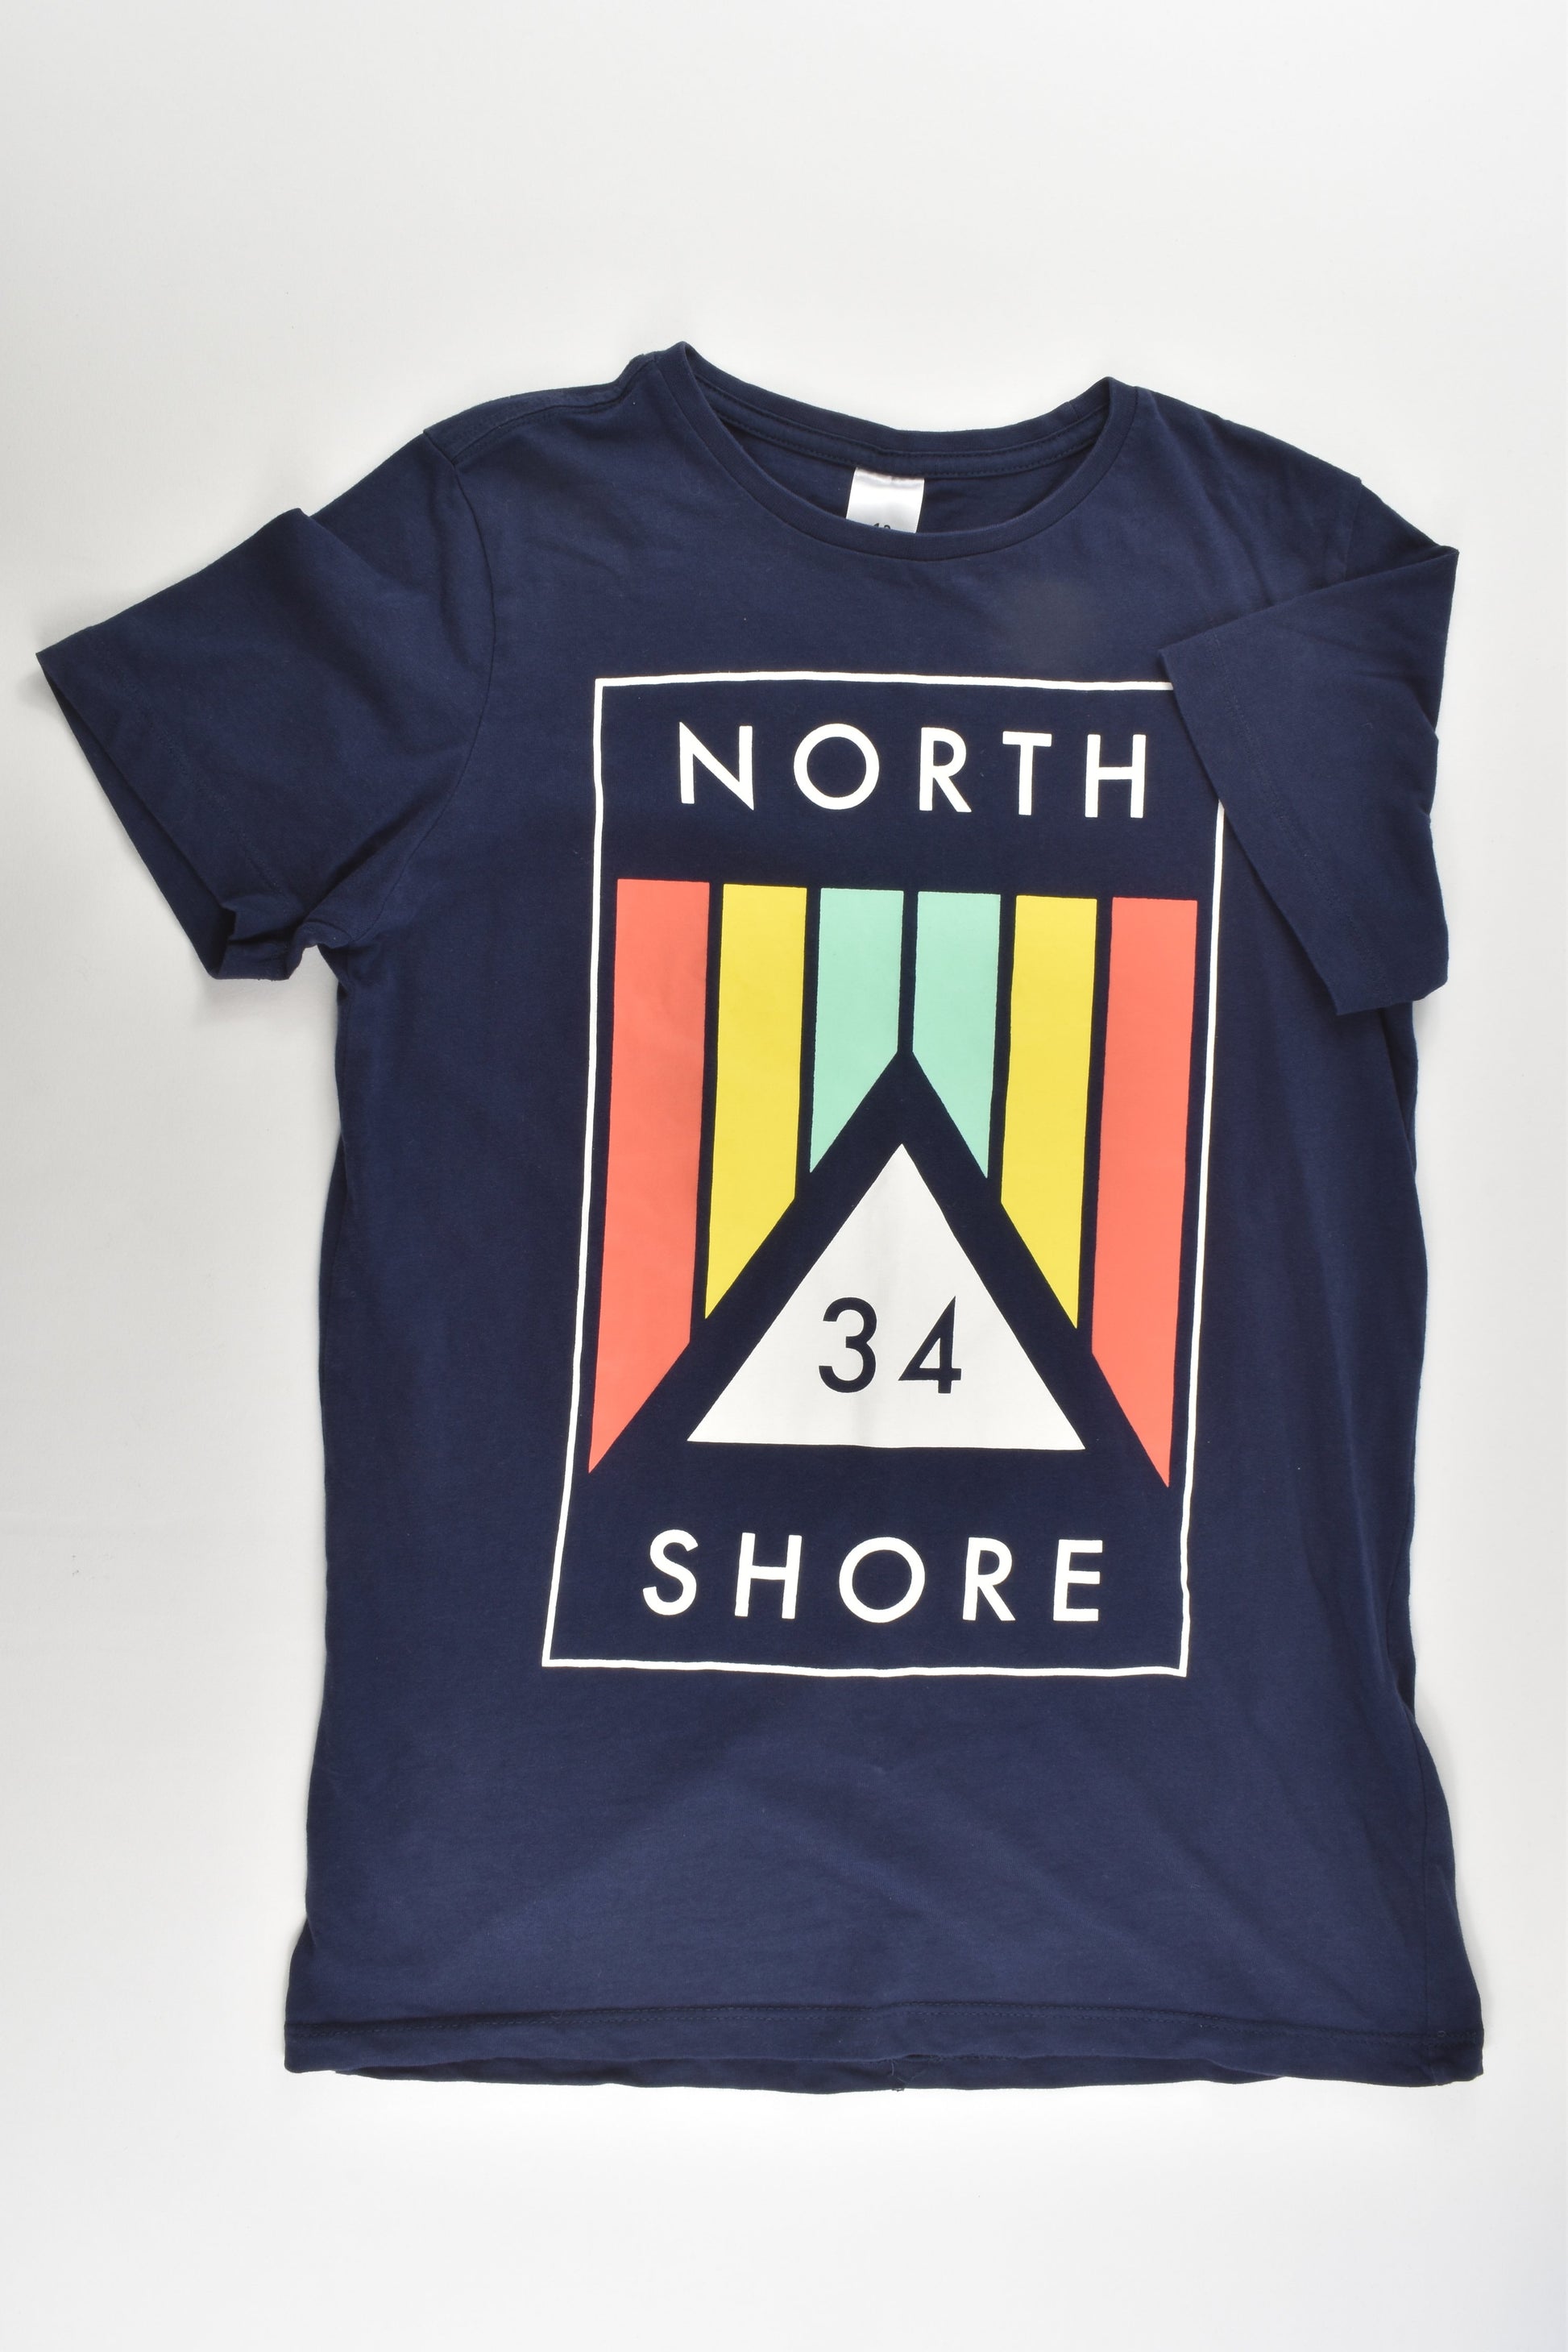 Target Size 12 'North Shore' T-shirt